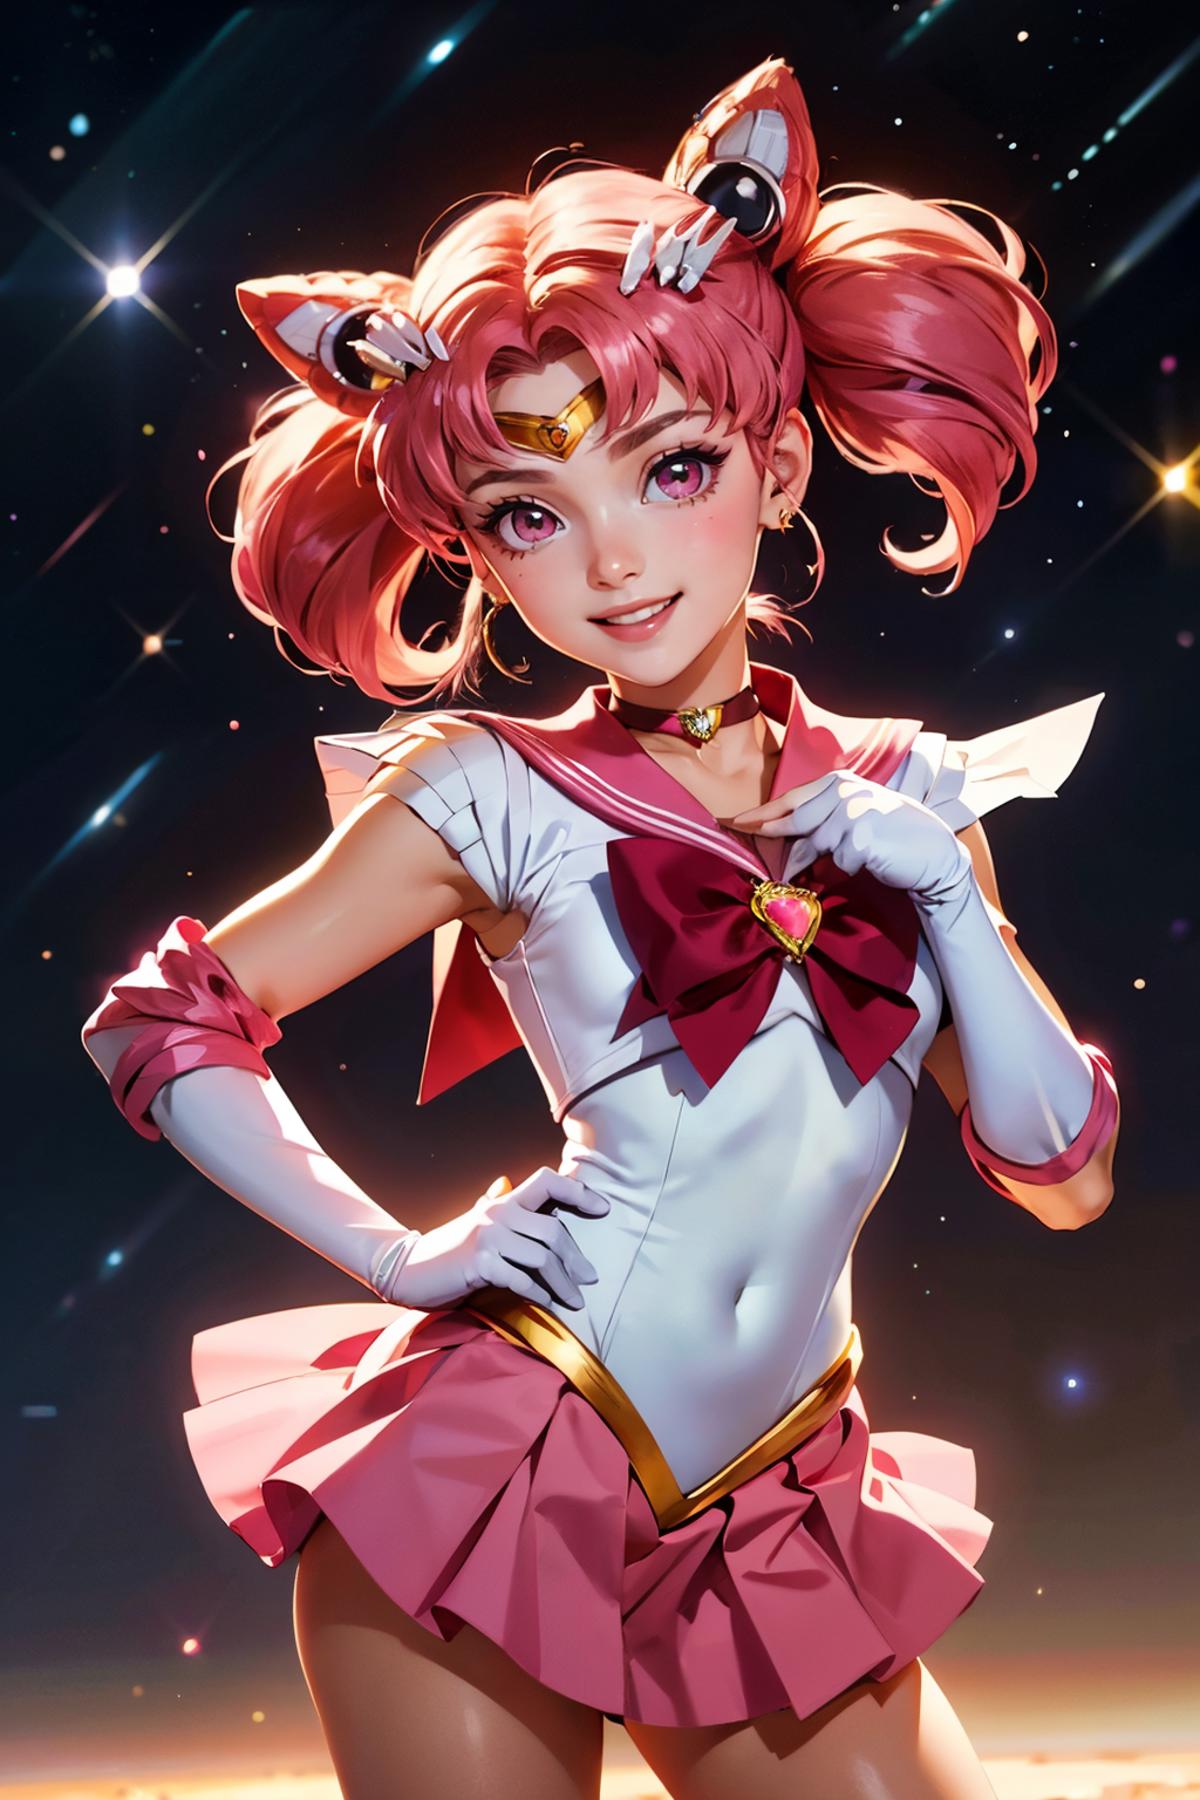 Chibiusa Tsukino (ちびうさ) / Sailor Chibi Moon (セーラーちびムーン) - Sailor Moon (美少女戦士セーラームーン) image by wikkitikki